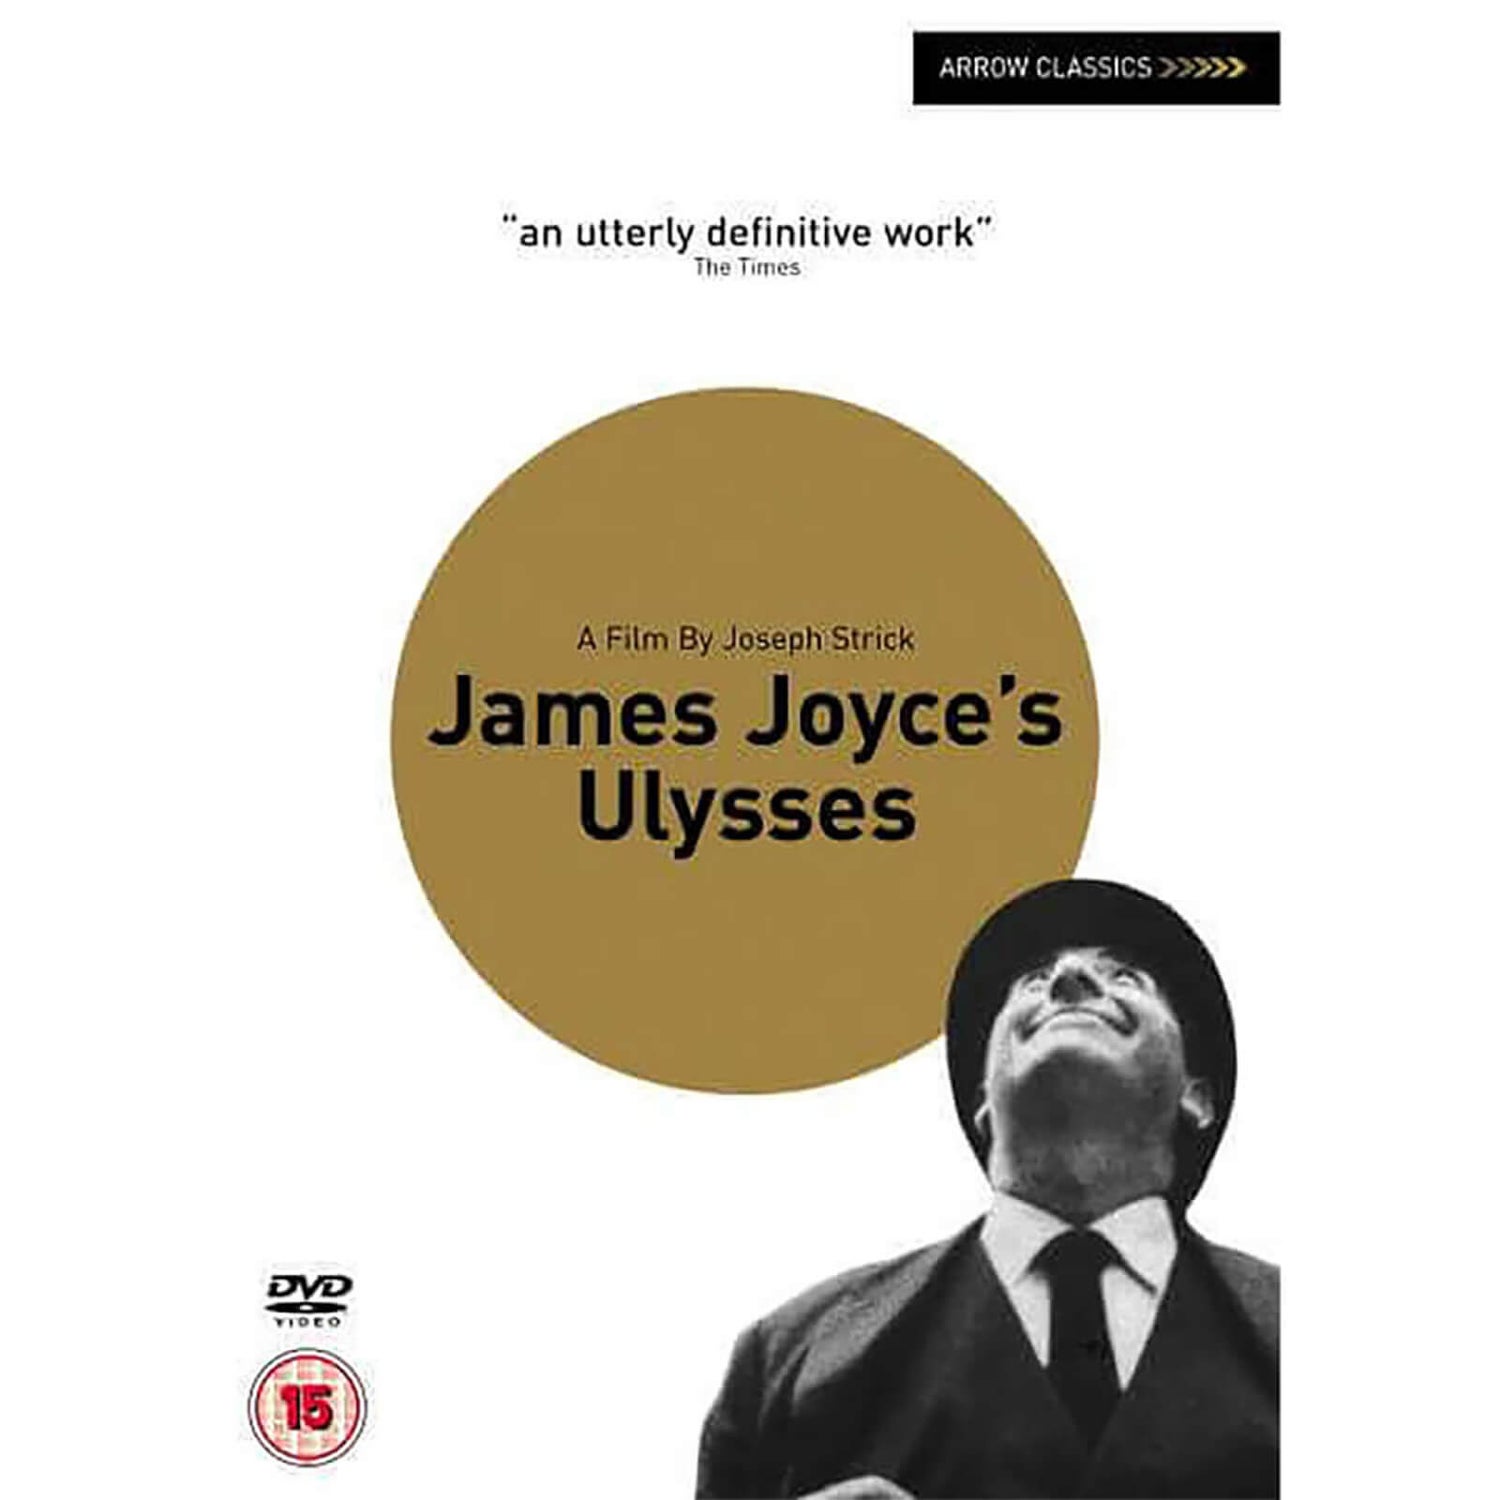 James Joyce's Ulysses DVD